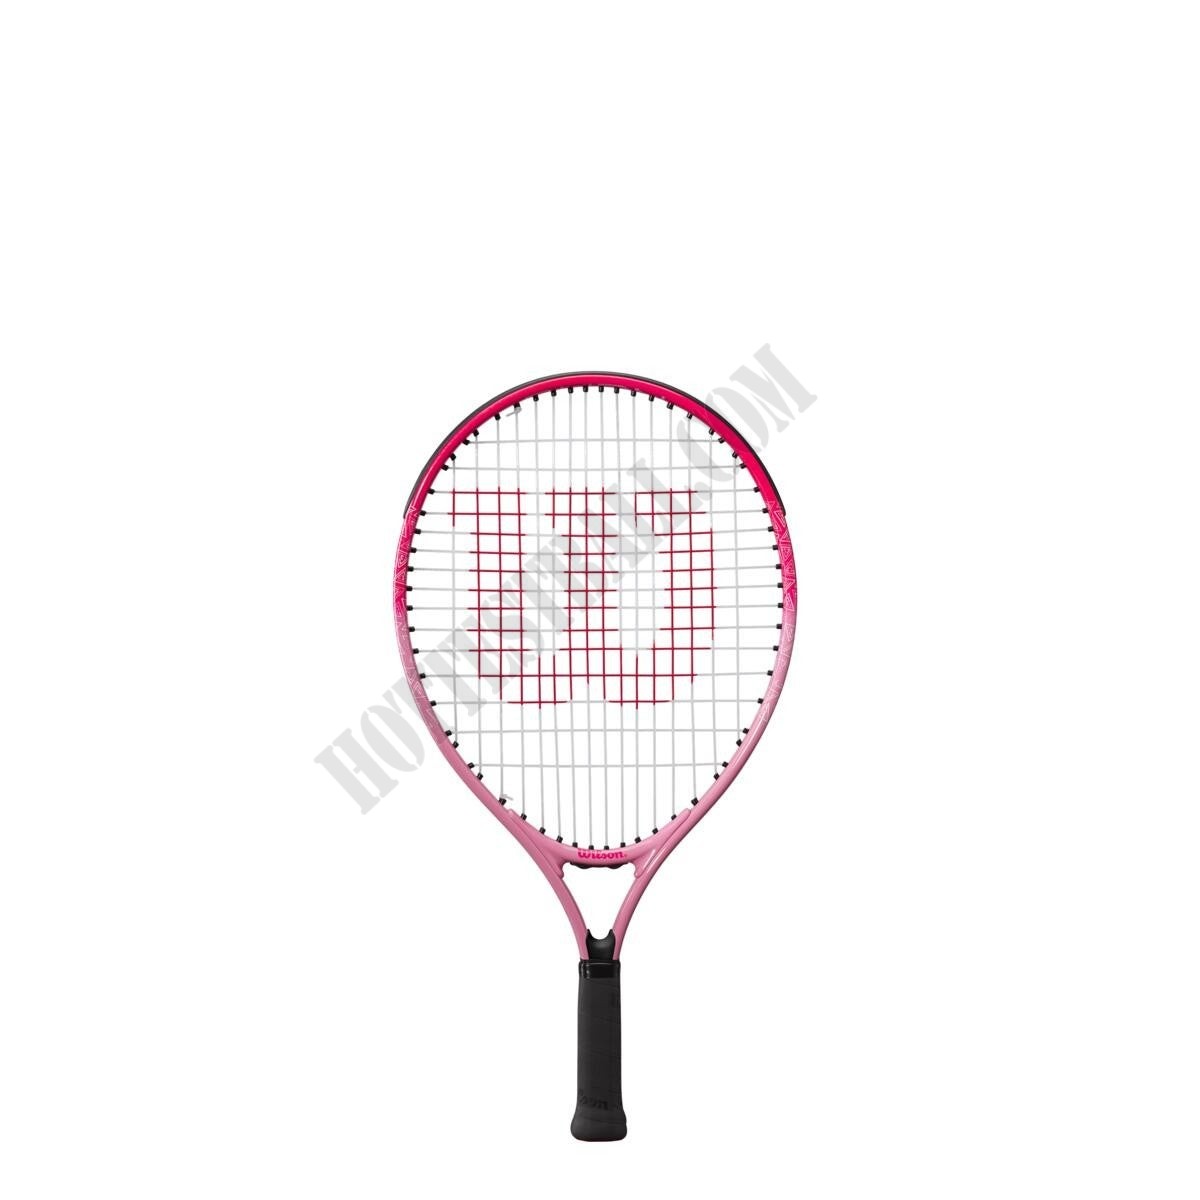 Burn Pink 19 Tennis Racket - Wilson Discount Store - Burn Pink 19 Tennis Racket - Wilson Discount Store